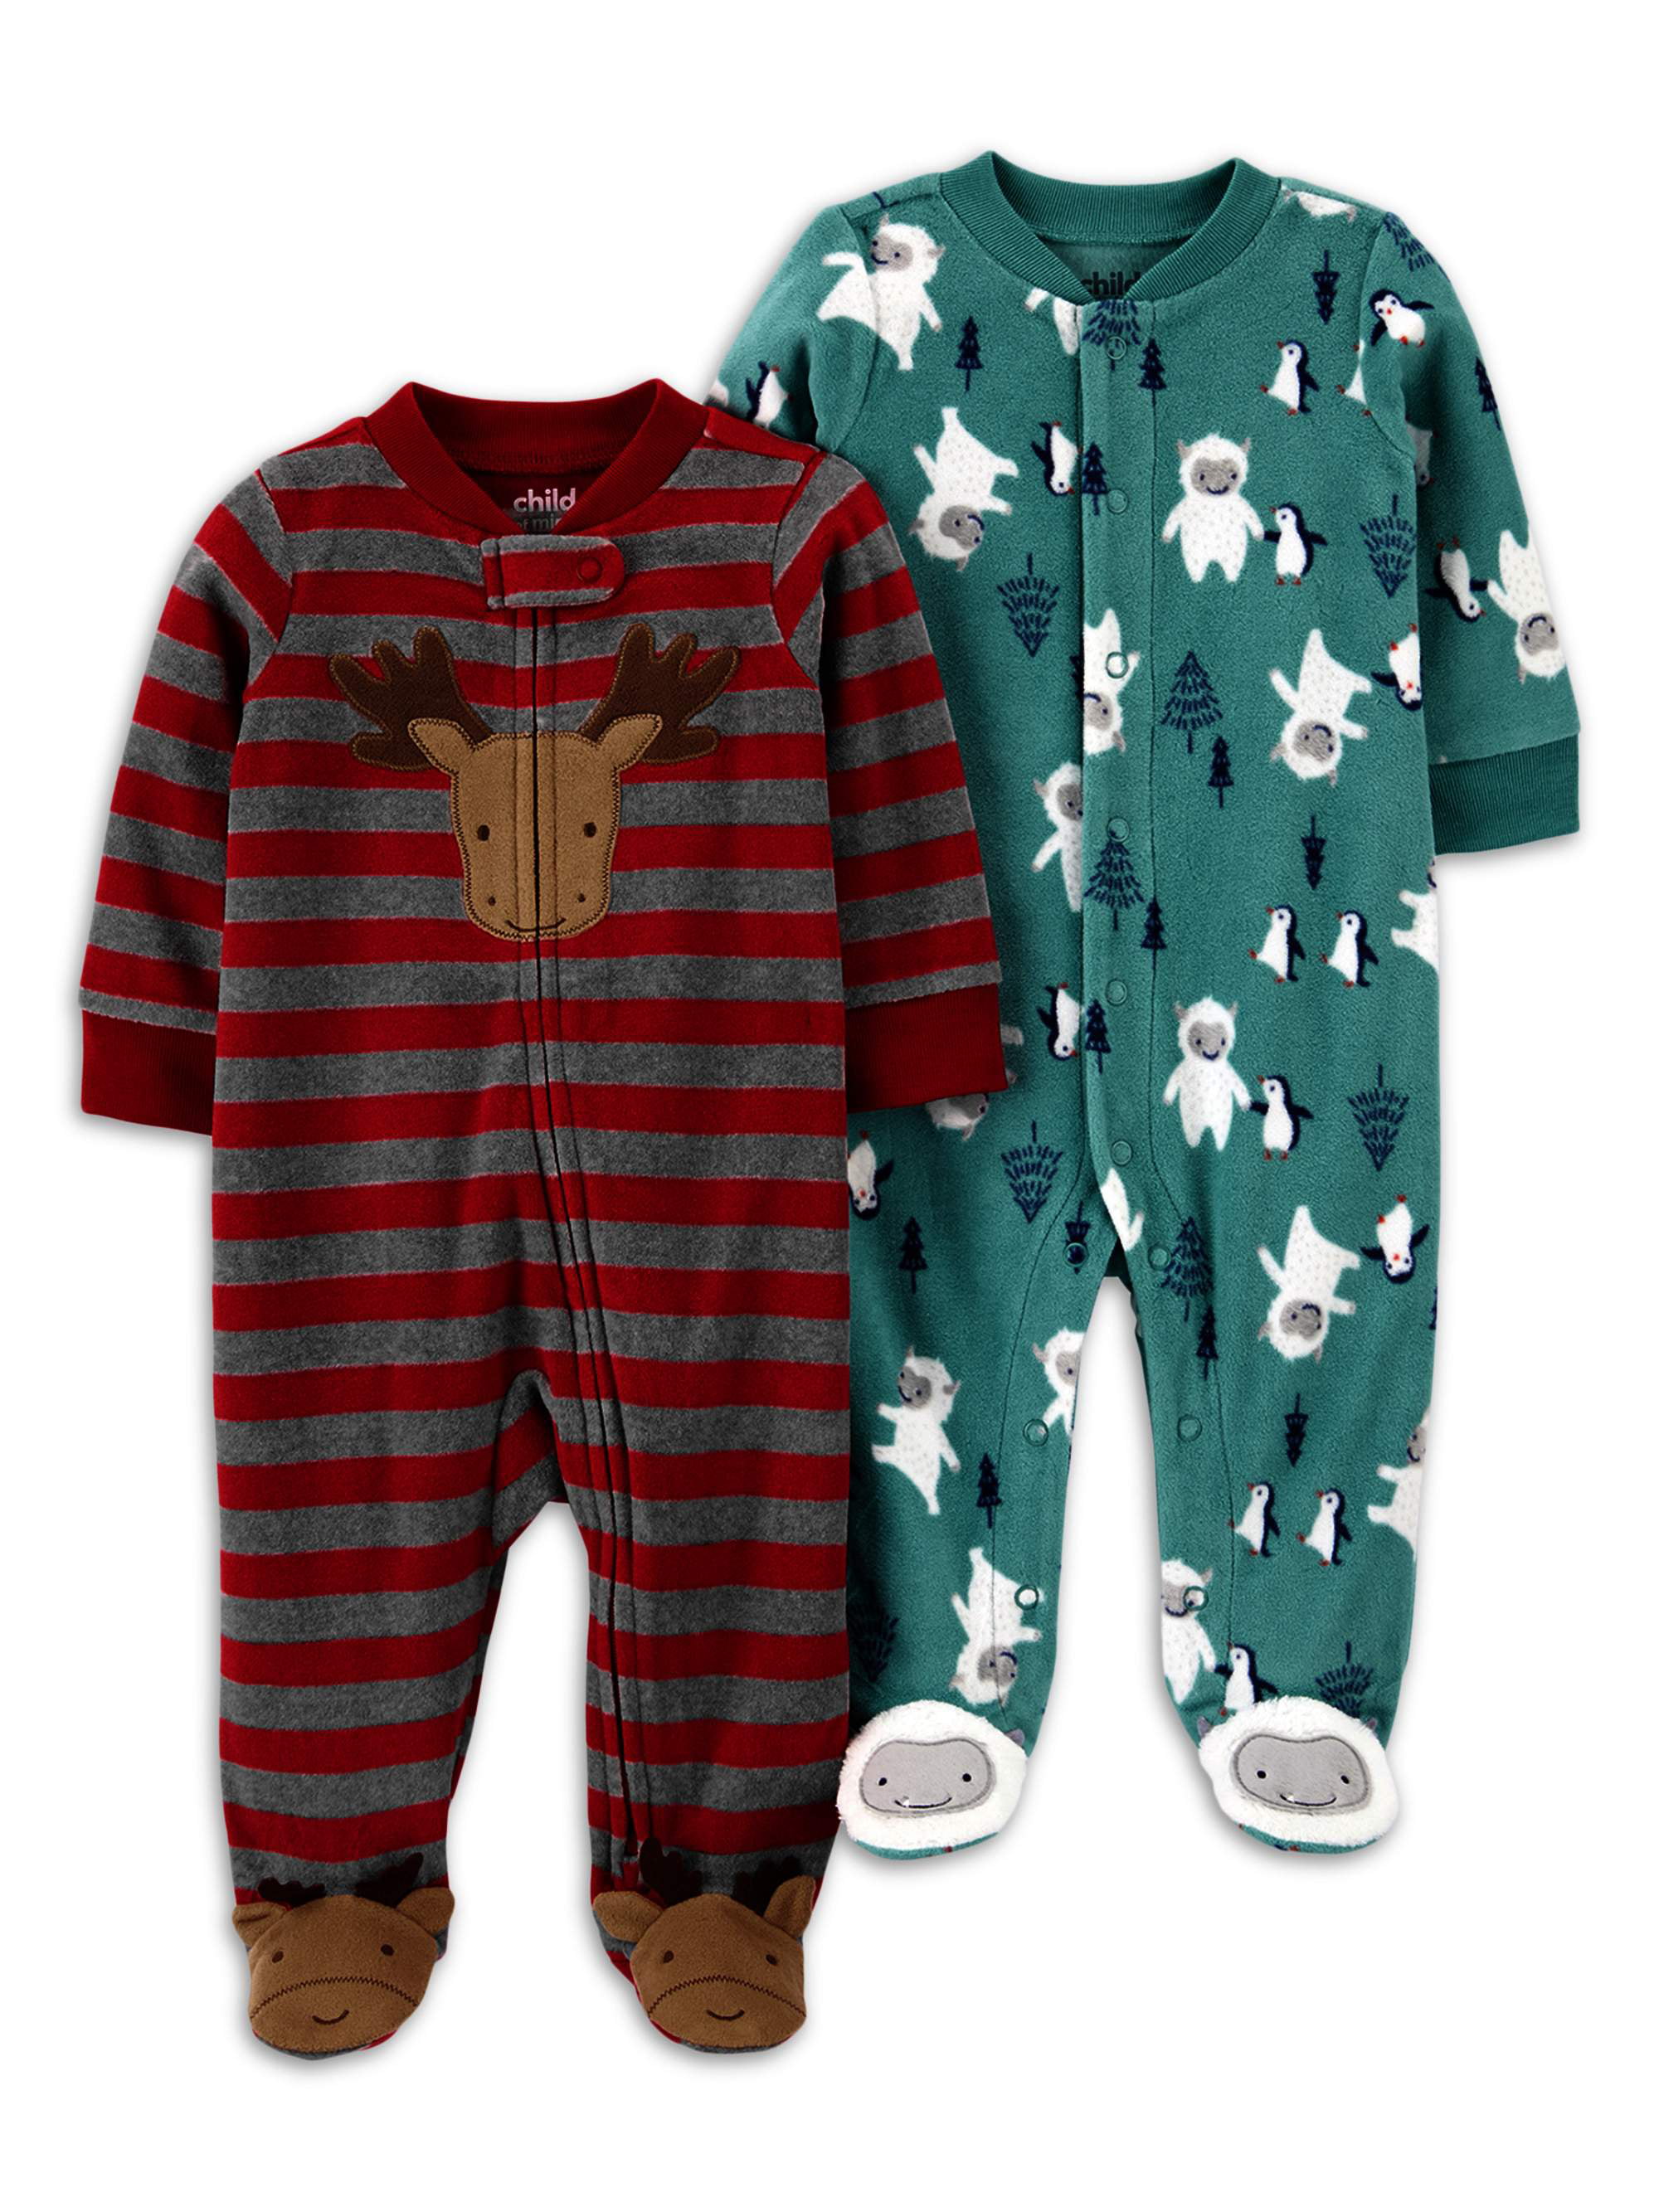 Sleep Play Xmas Fleece Boys Sleeper Warm Outfit Footed Pajamas Coverall Holiday 